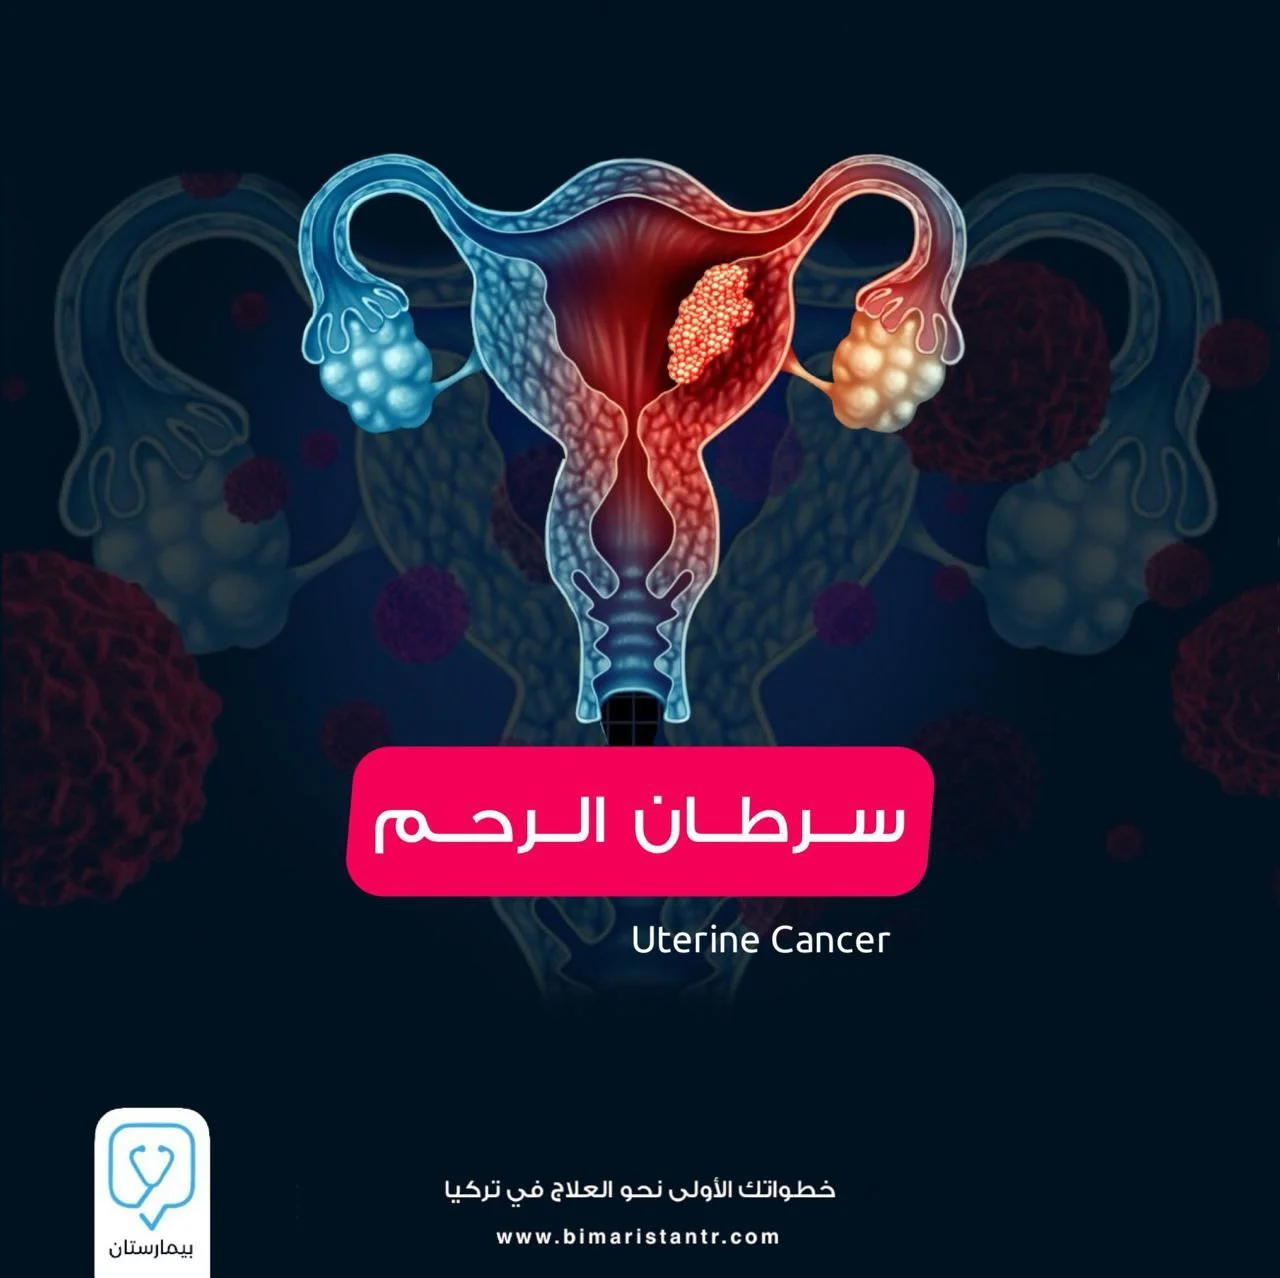 Uterine-cancer-uterine-cancer_-symptoms-and-treatment-of-endometrial-cancer